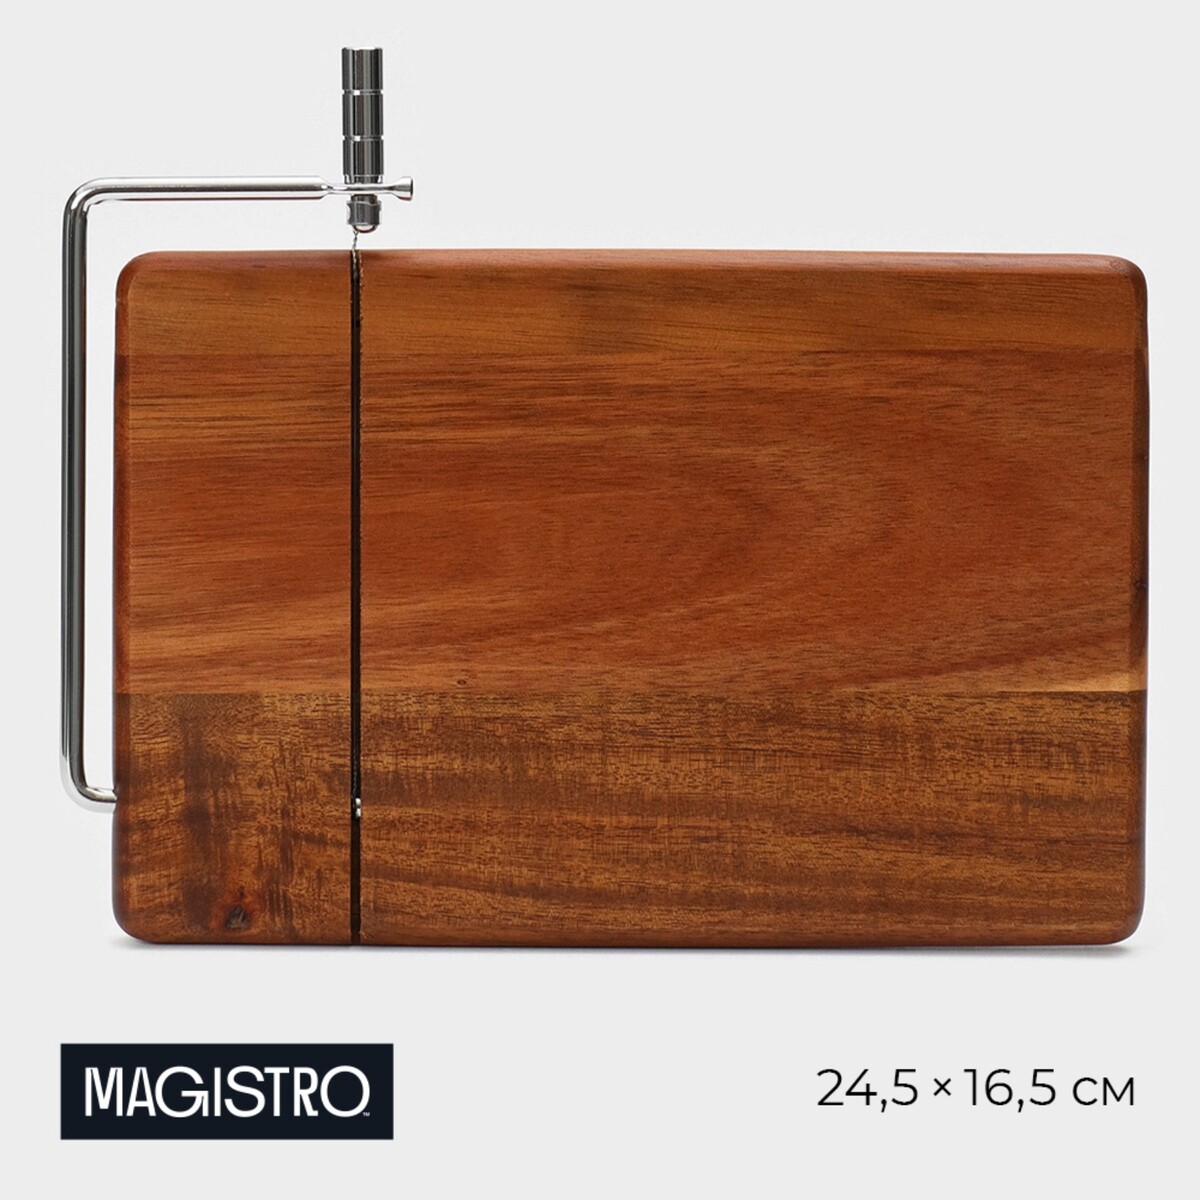 Доска для нарезки сыра magistro, 24,5×16,5 см, акация доска для подачи magistro forest dream 33×20 см акация мрамор